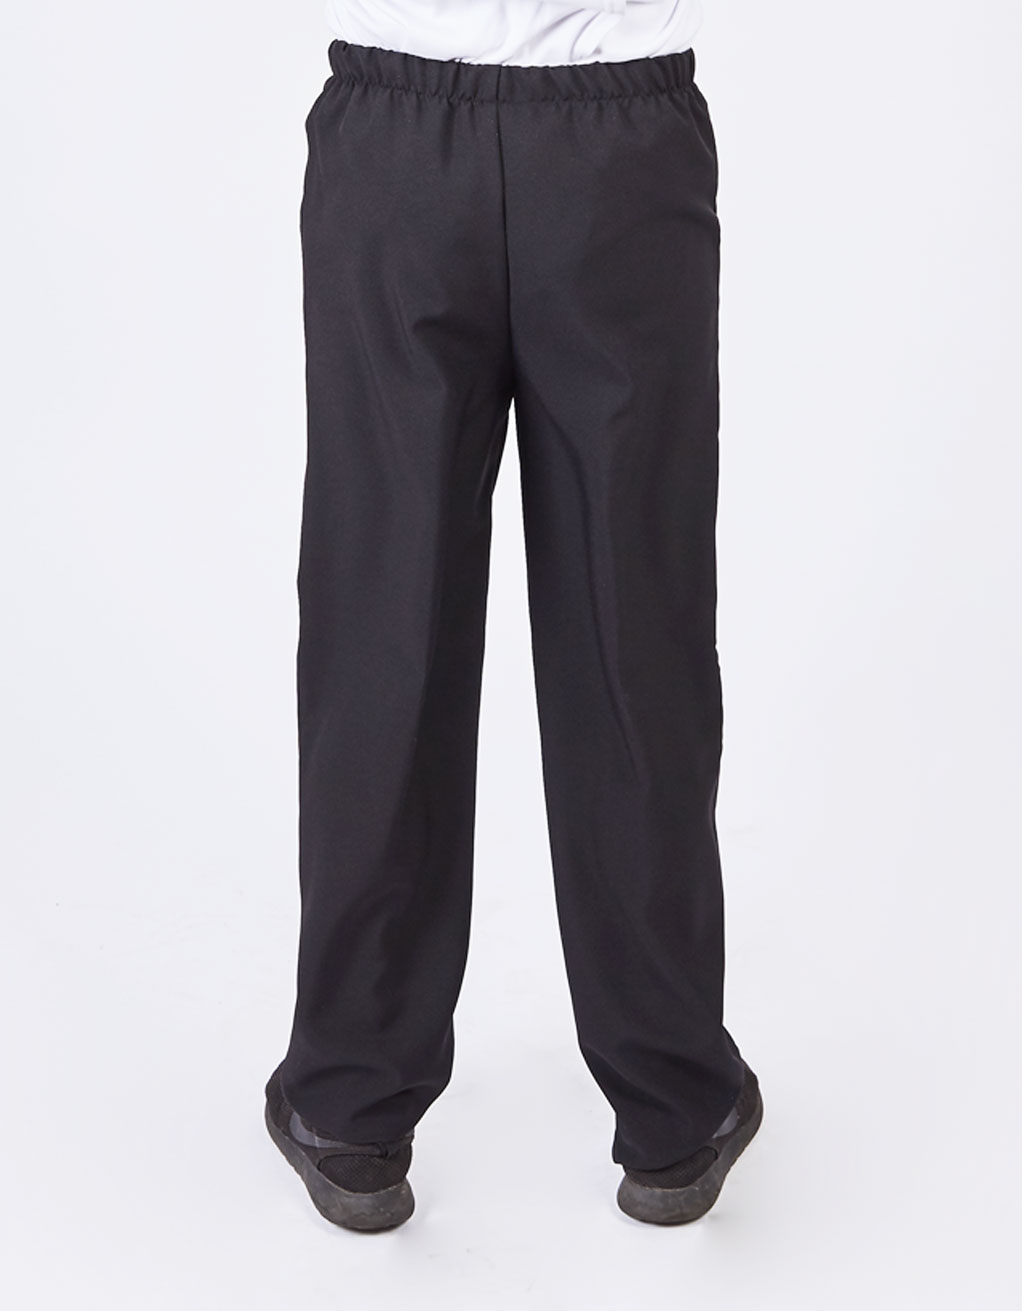 Adaptive elastic waist pants with pockets and decorative zipper